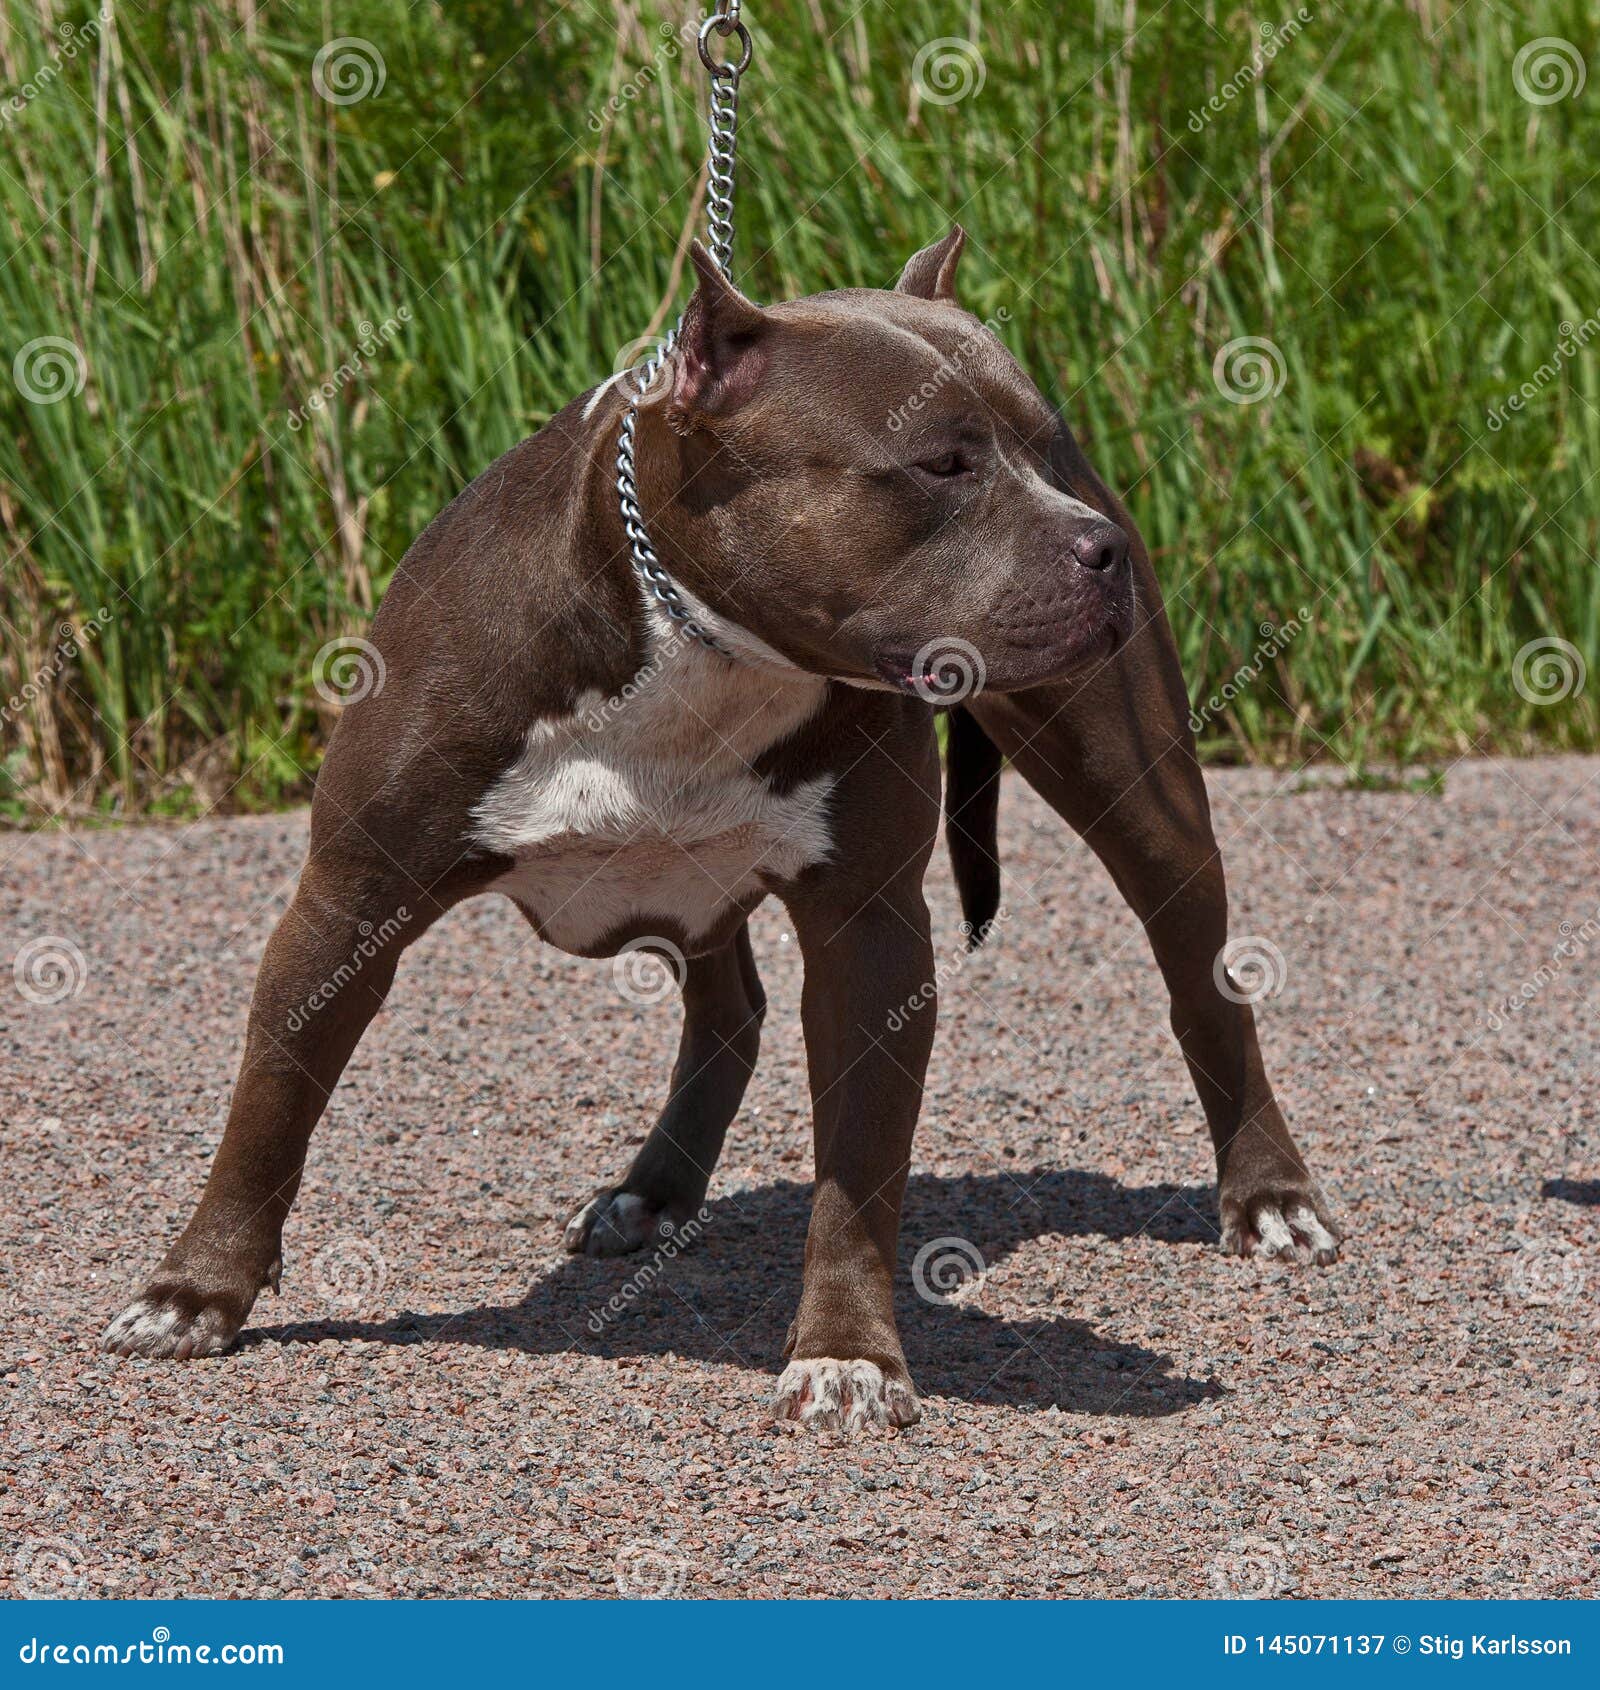 American Pitbull Terrier Male Stock Image Image of bulls